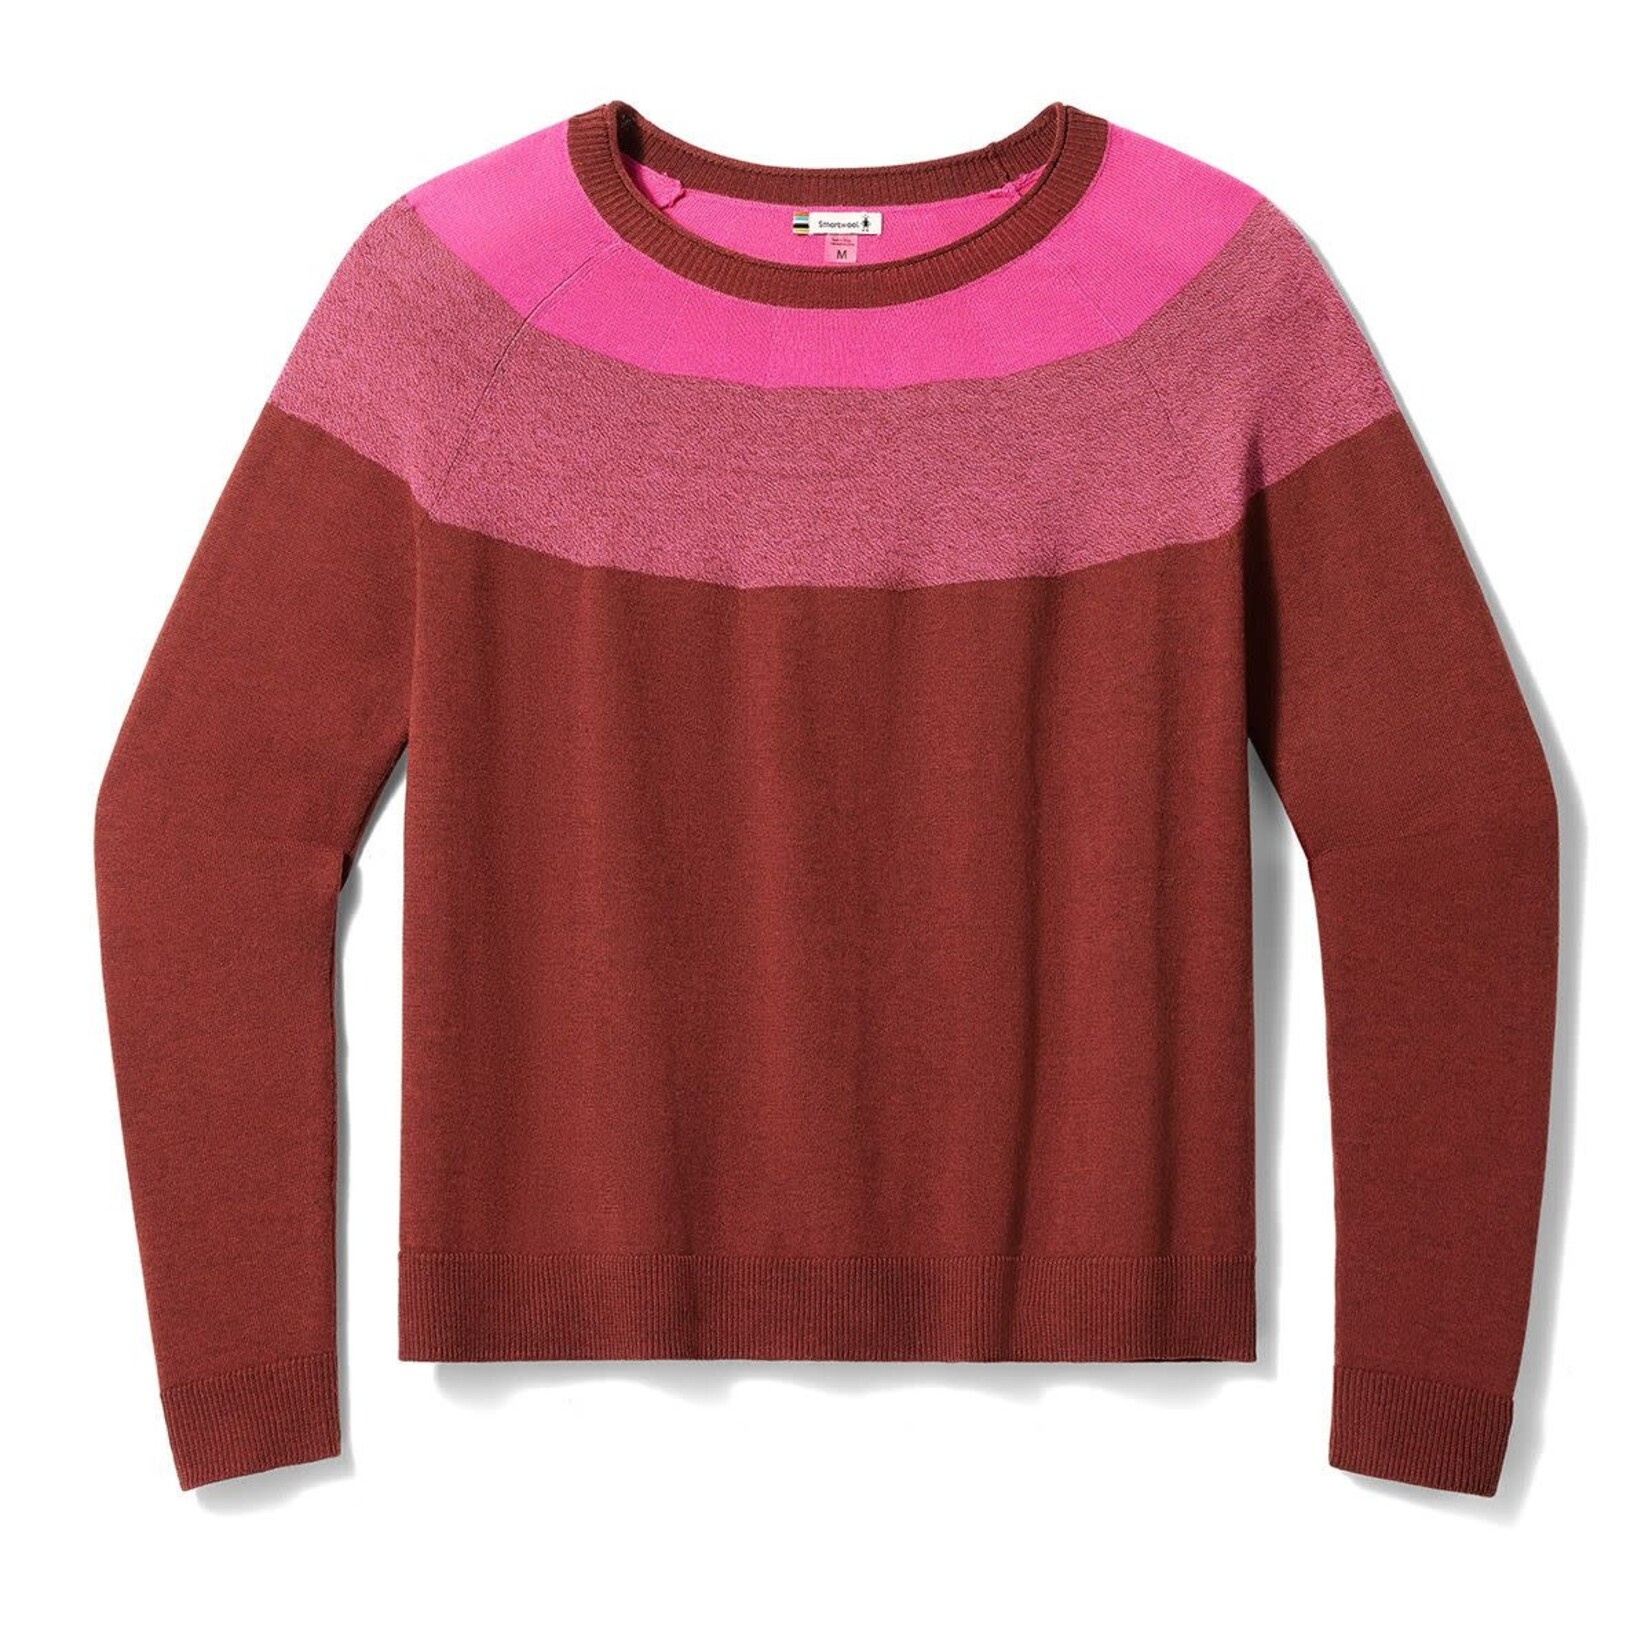 Smartwool Edgewood Colorblock Crew Sweater (Chandail femme)